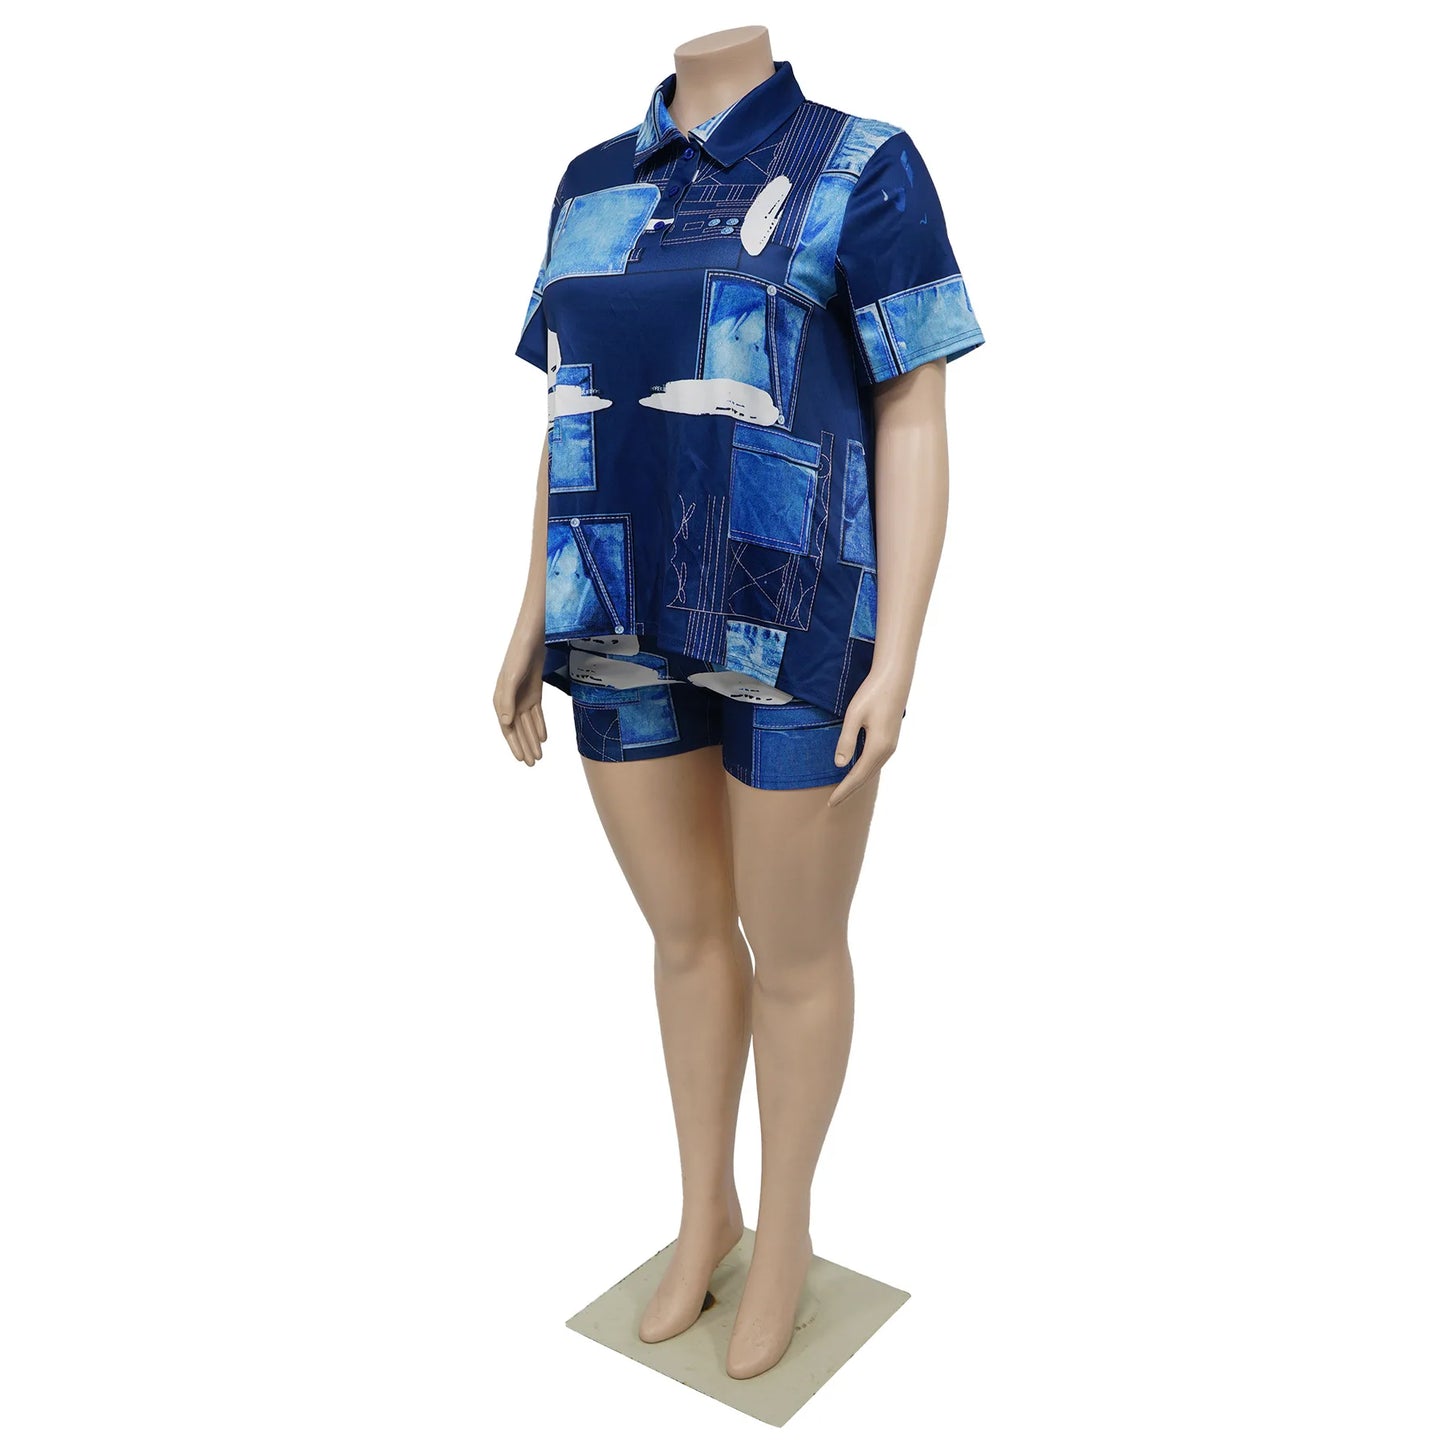 Plus Size Women Prining Two-piece Set Fashion Turn Down Neck Shirt Short Sleeves Summer Casual Shorts Suit XL-5XL